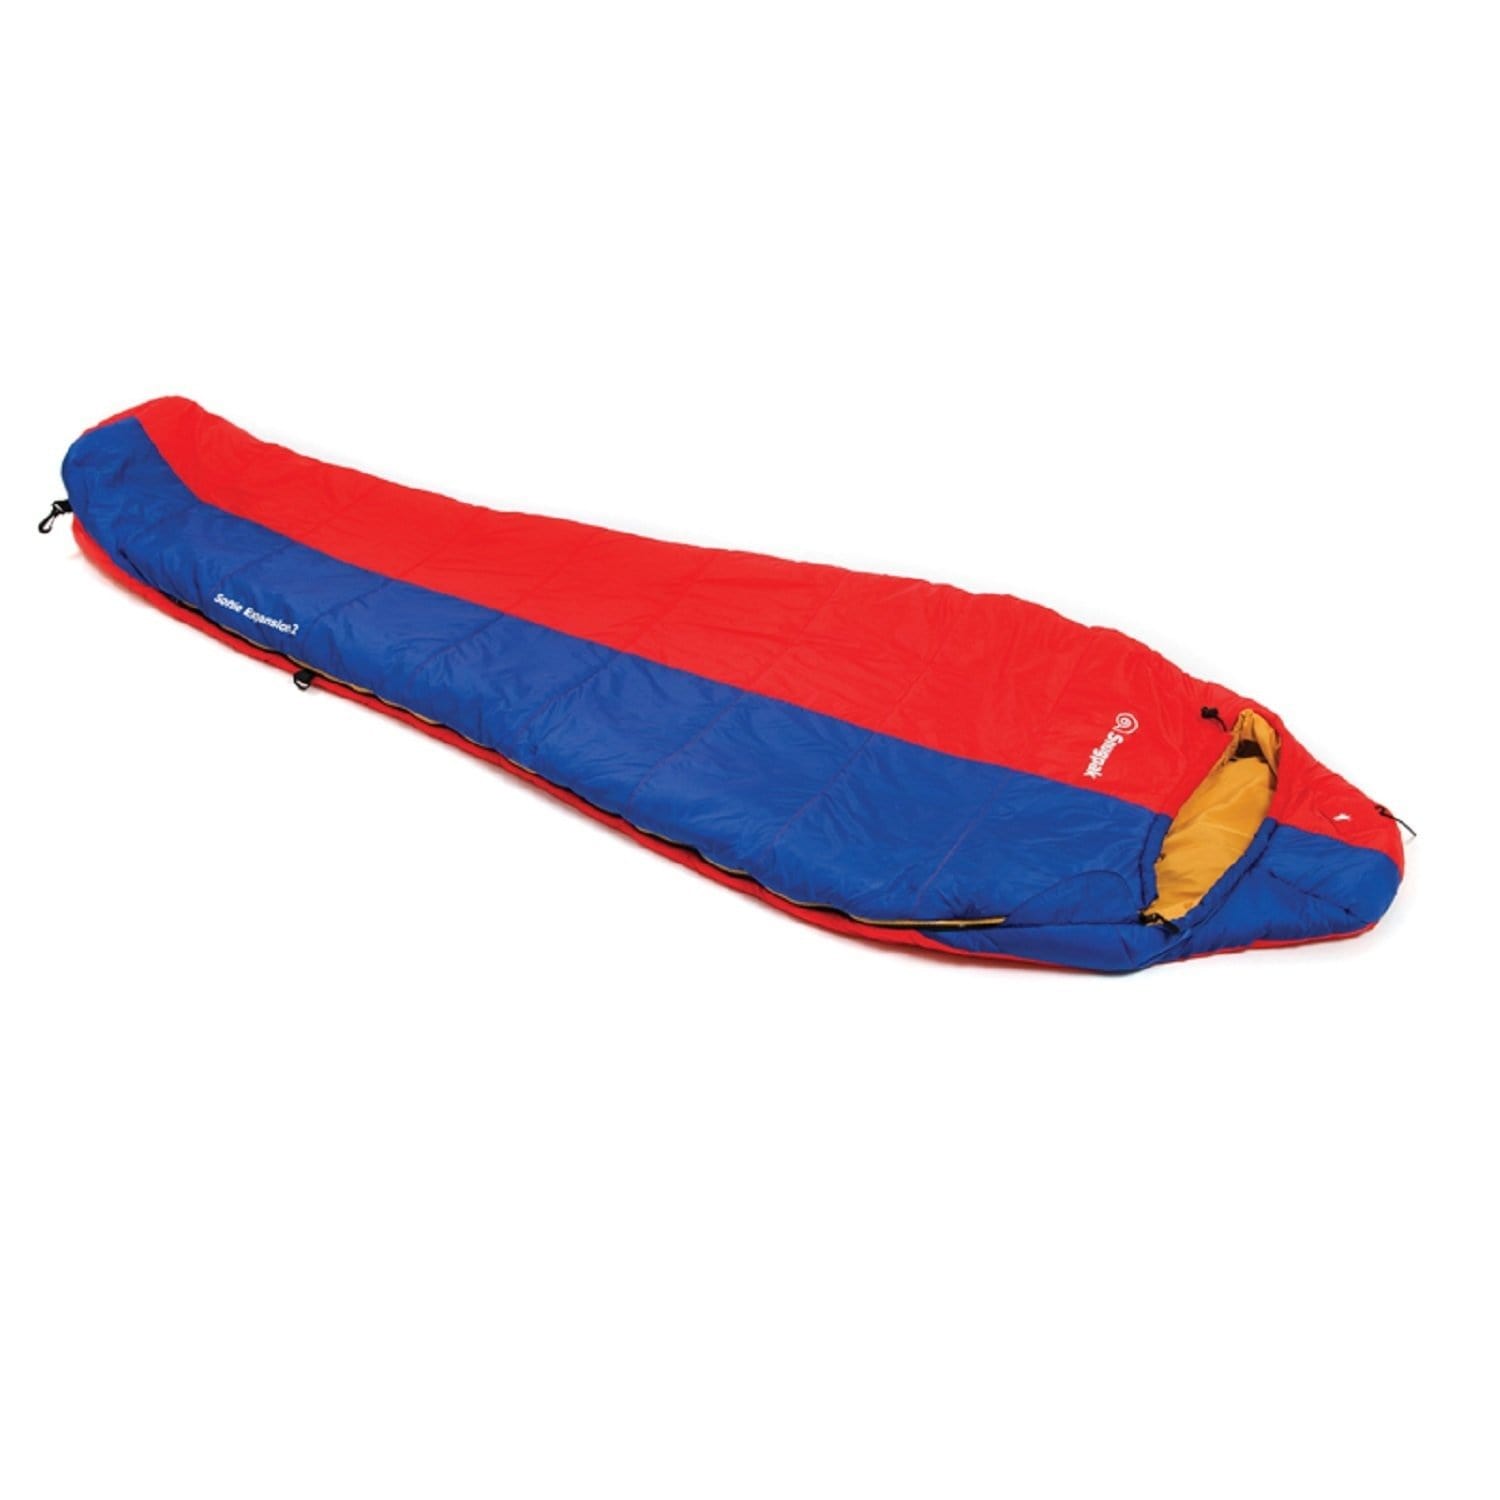 Snugpak Camping & Outdoor : Sleeping Bags & Cots Snugpak Softie Expansion 2 Sleeping Bag - Red/Azure